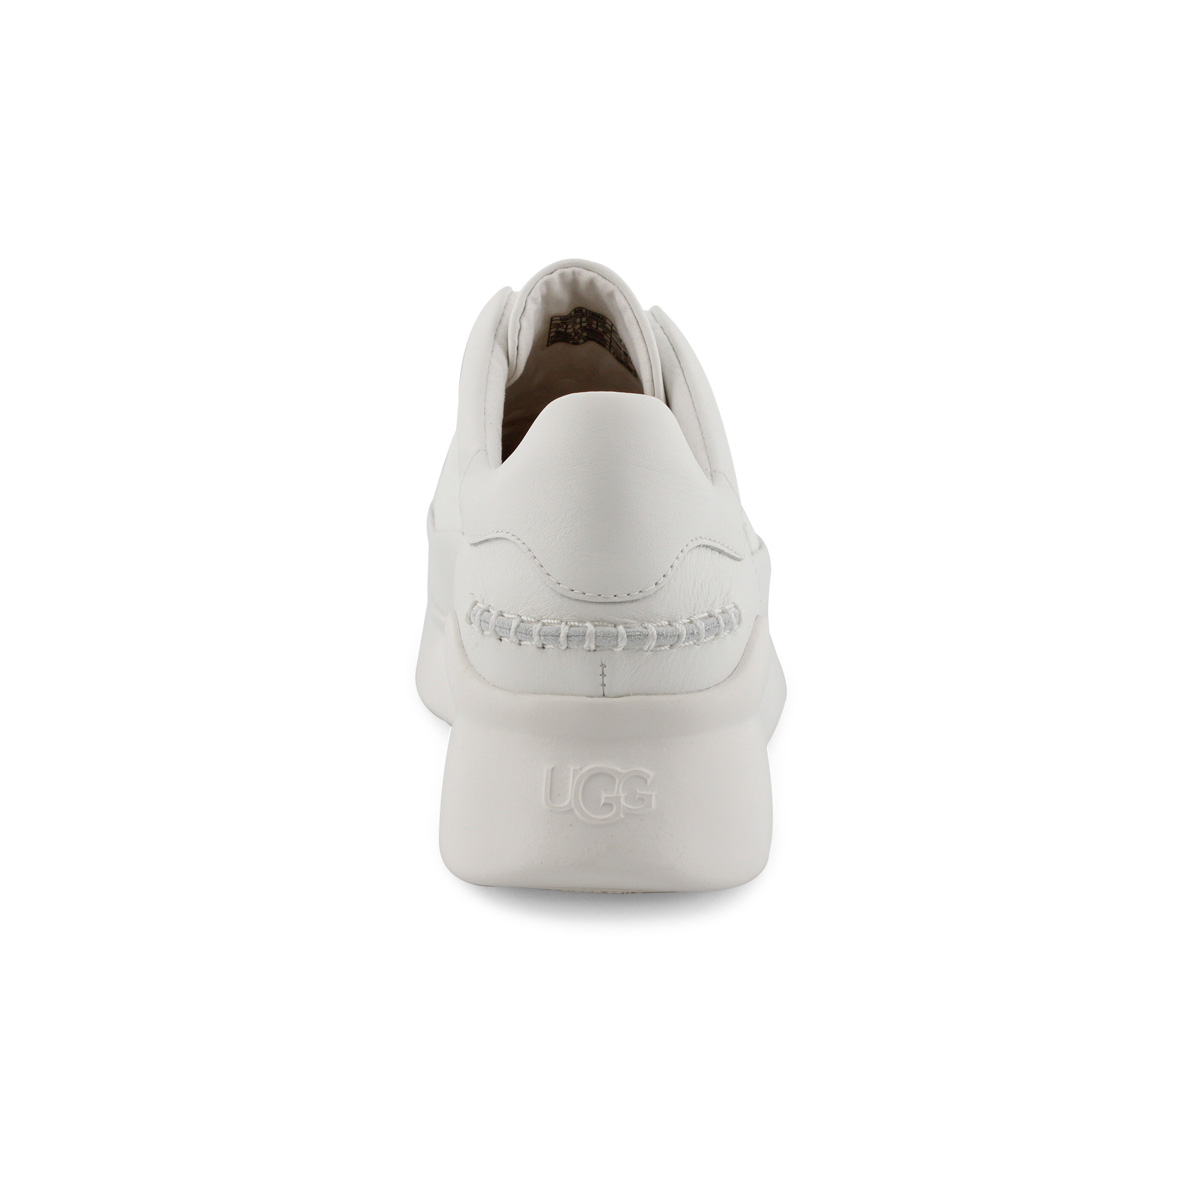 UGG Women's LIBU white slip on sneakers | SoftMoc.com